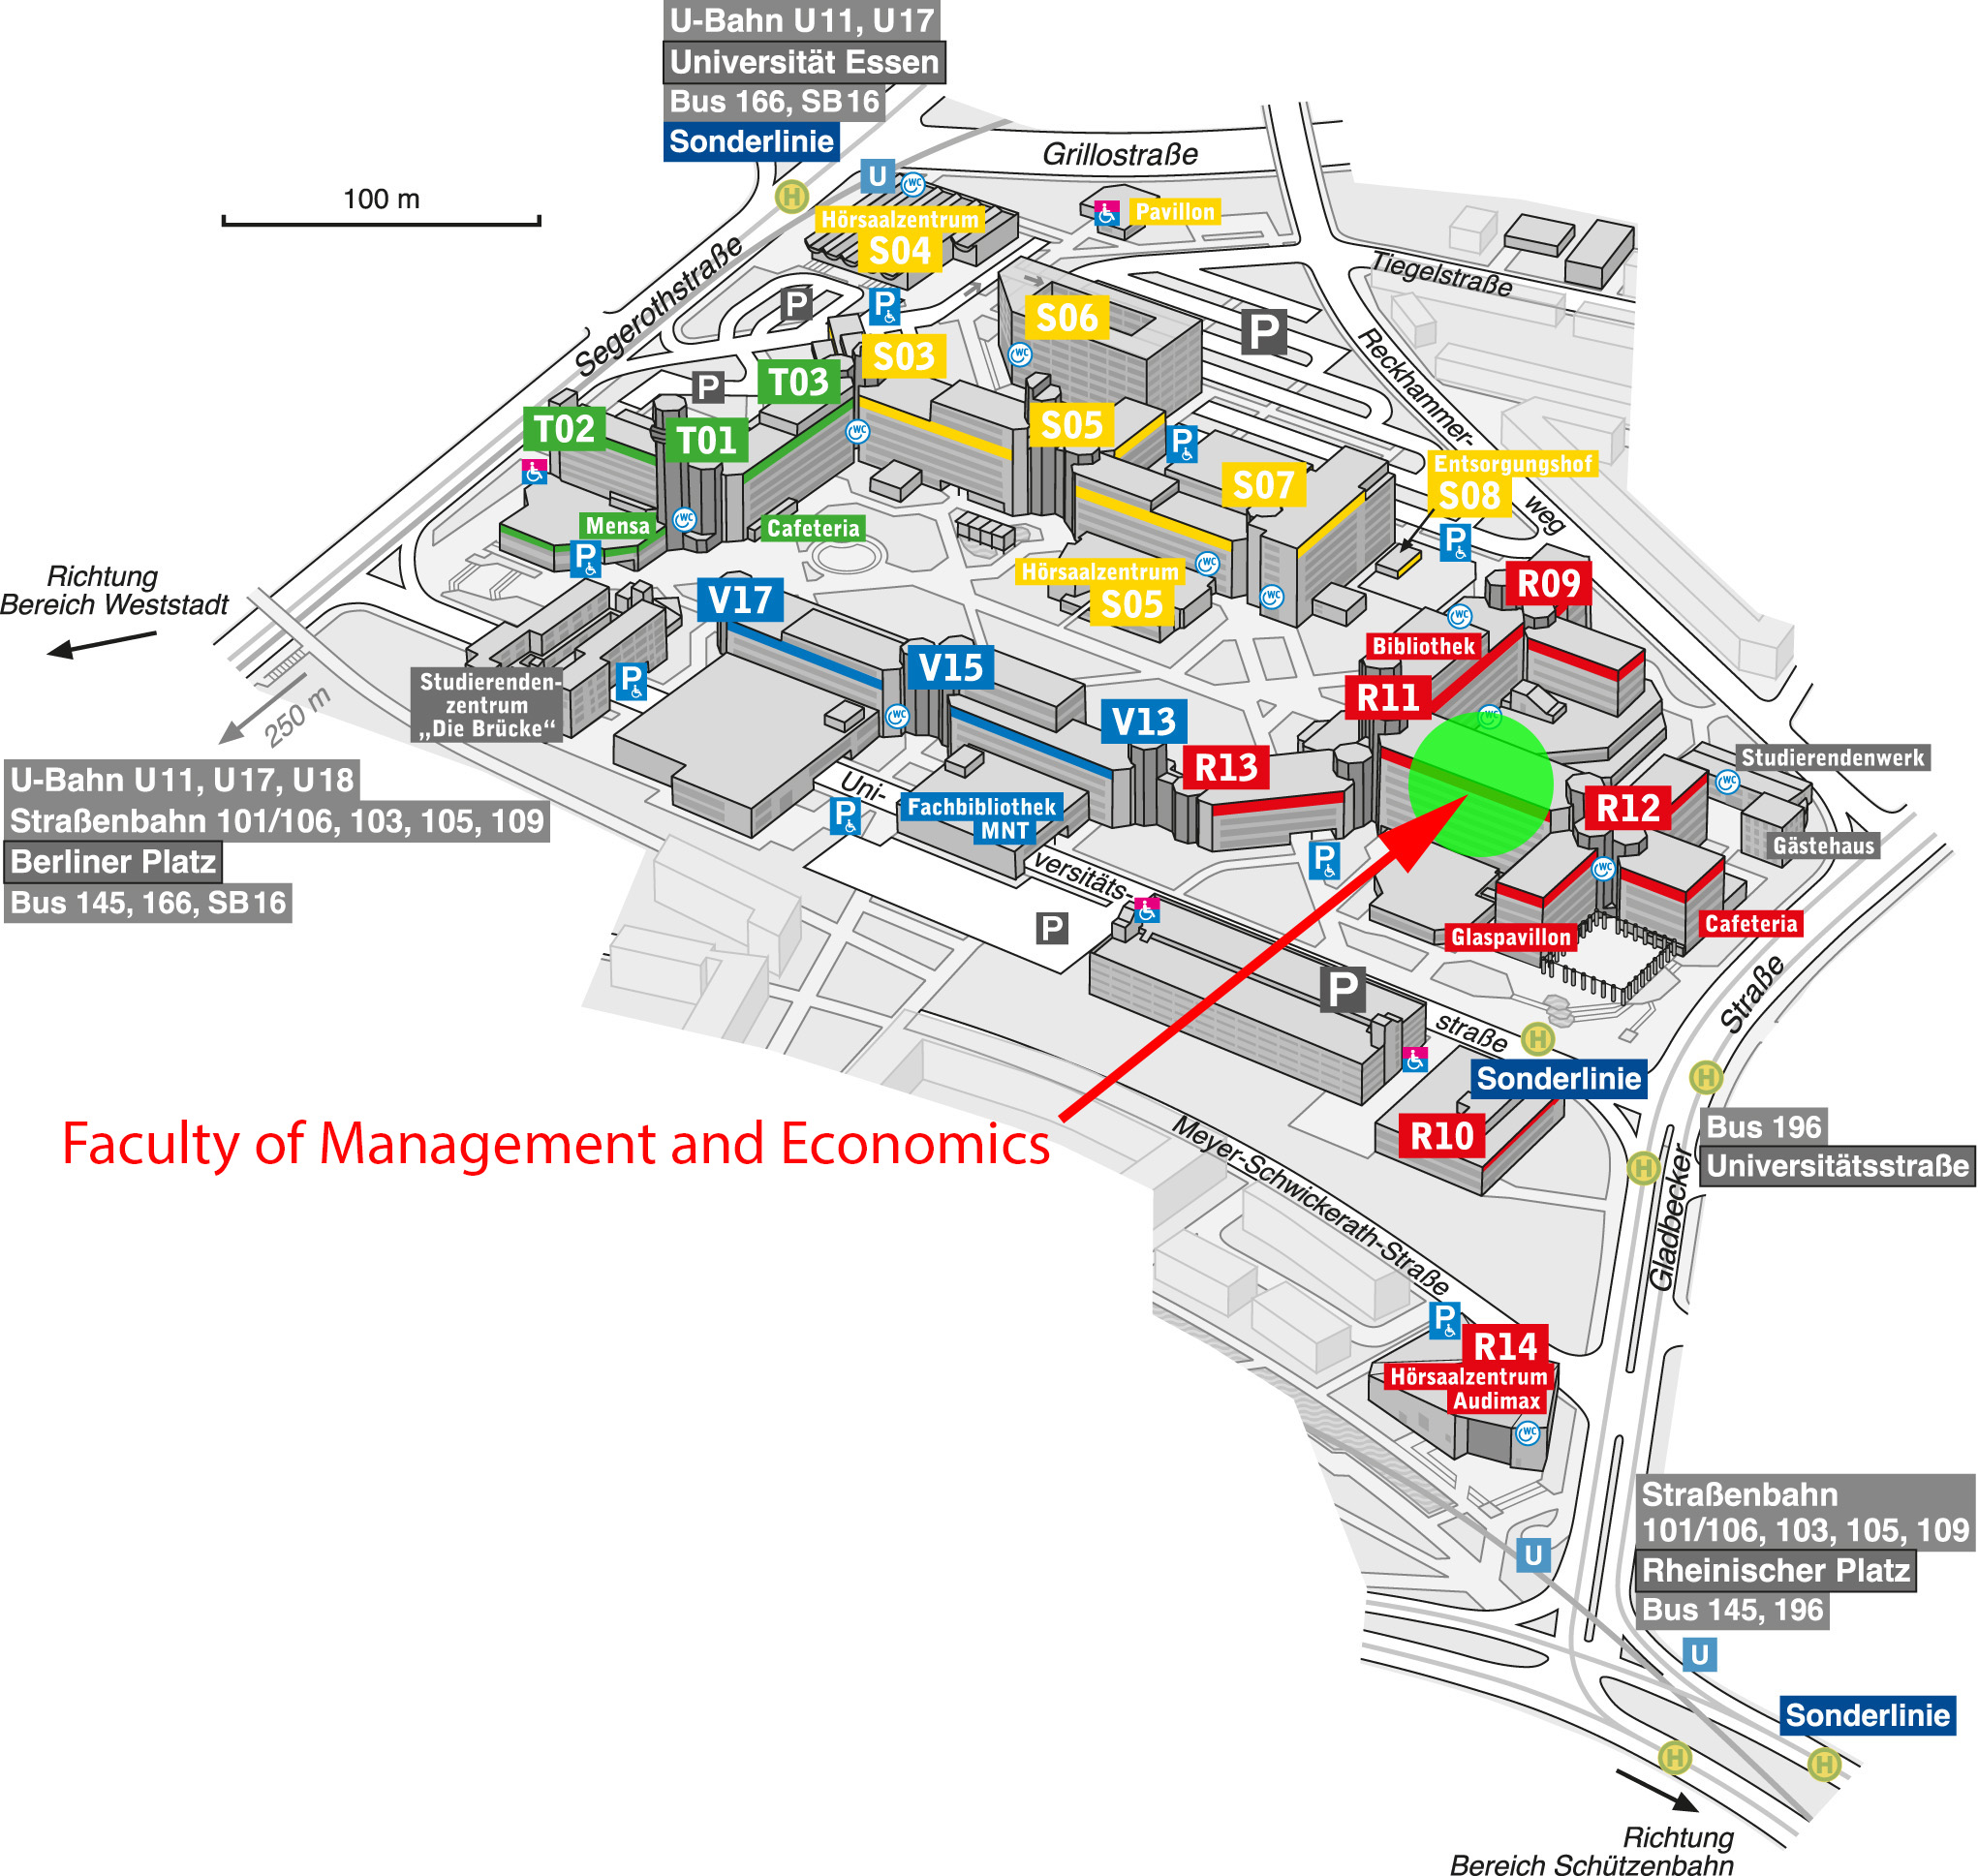 Campus plan of University of Duisburg-Essen (Campus Essen)